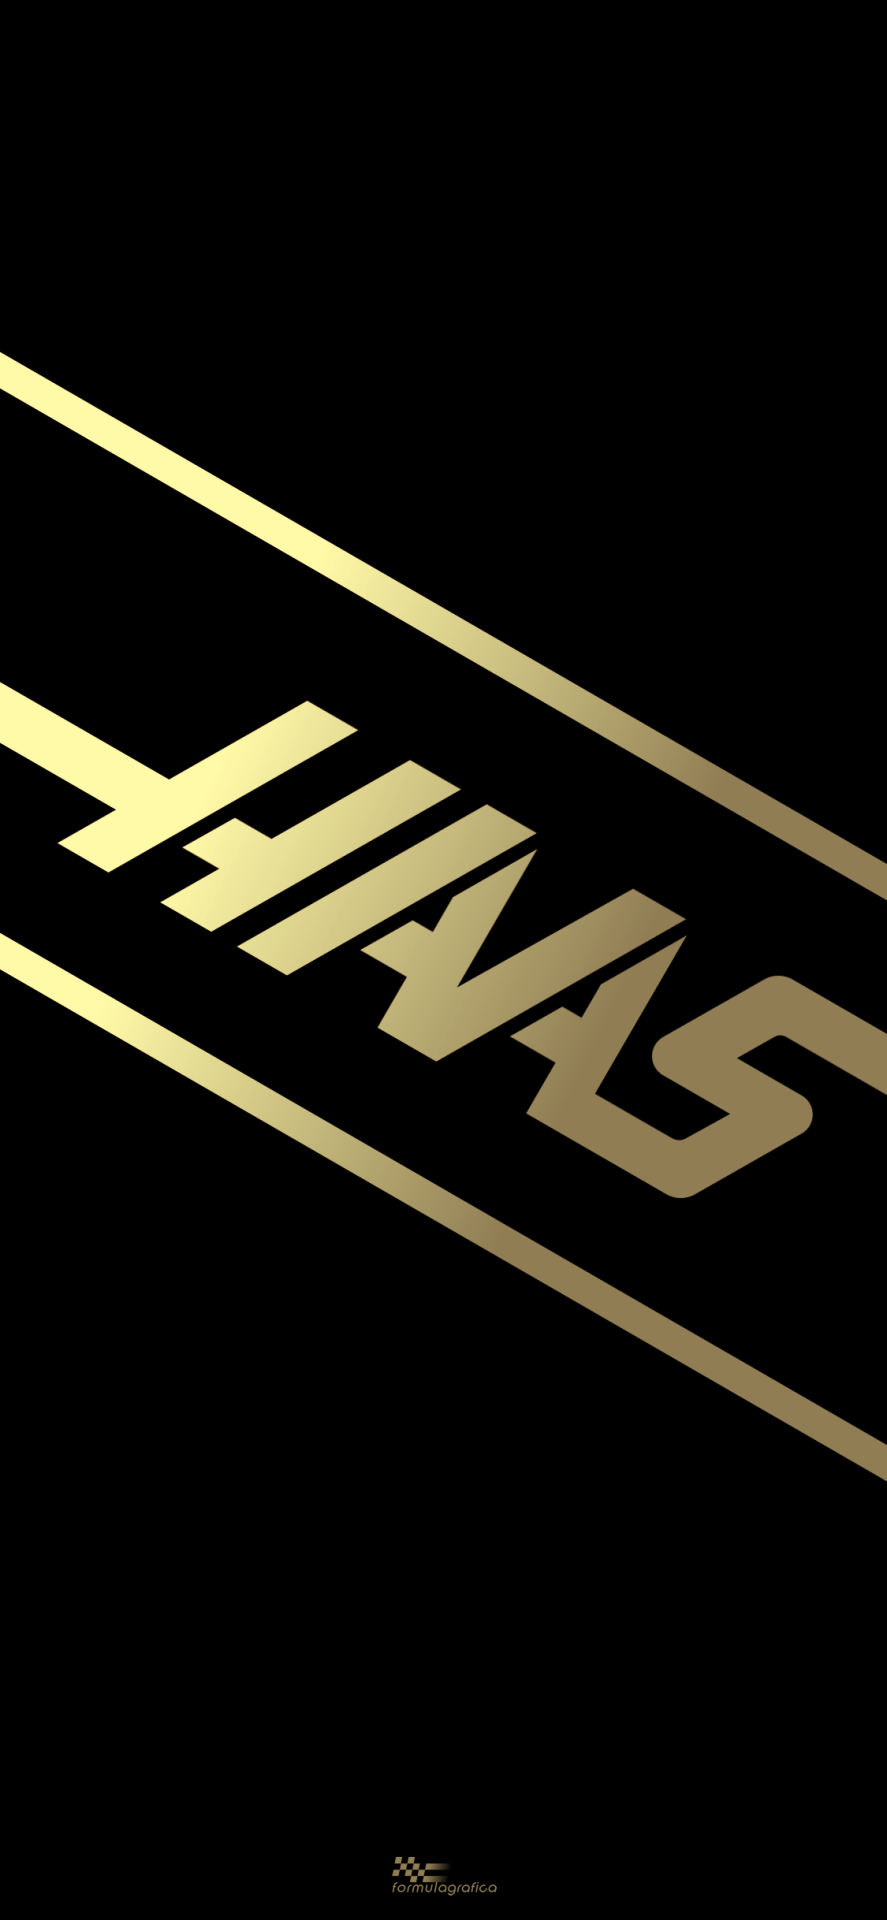 IPhone / Smartphone Wallpaper Formula 1 Season Energy Haas F1 Team (VF 19) Boom! He're Comes The. Haas F1 Team, Team Wallpaper, Formula 1